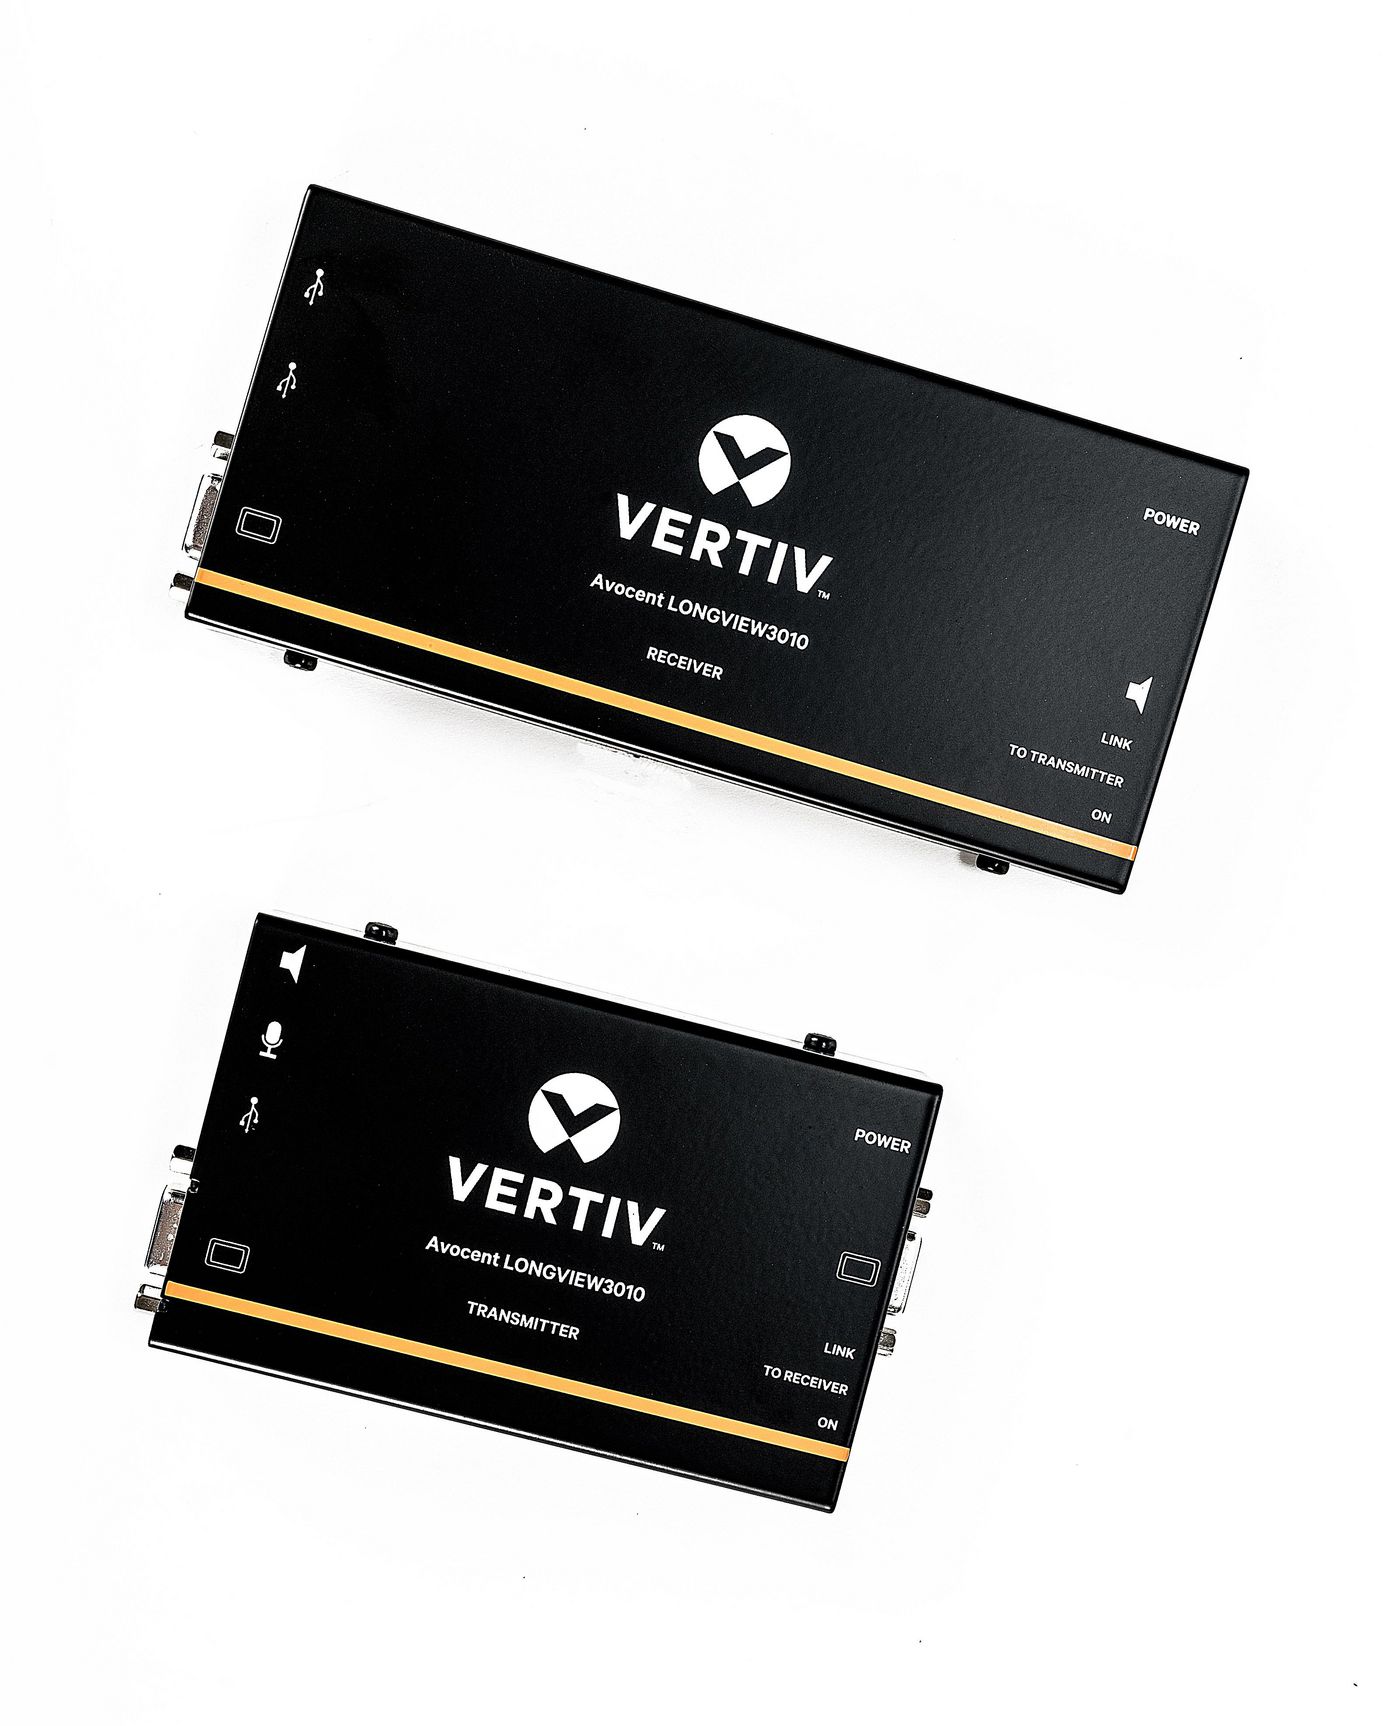 Vertiv LV3010P-202 LongView single VGA,USB,audio, 